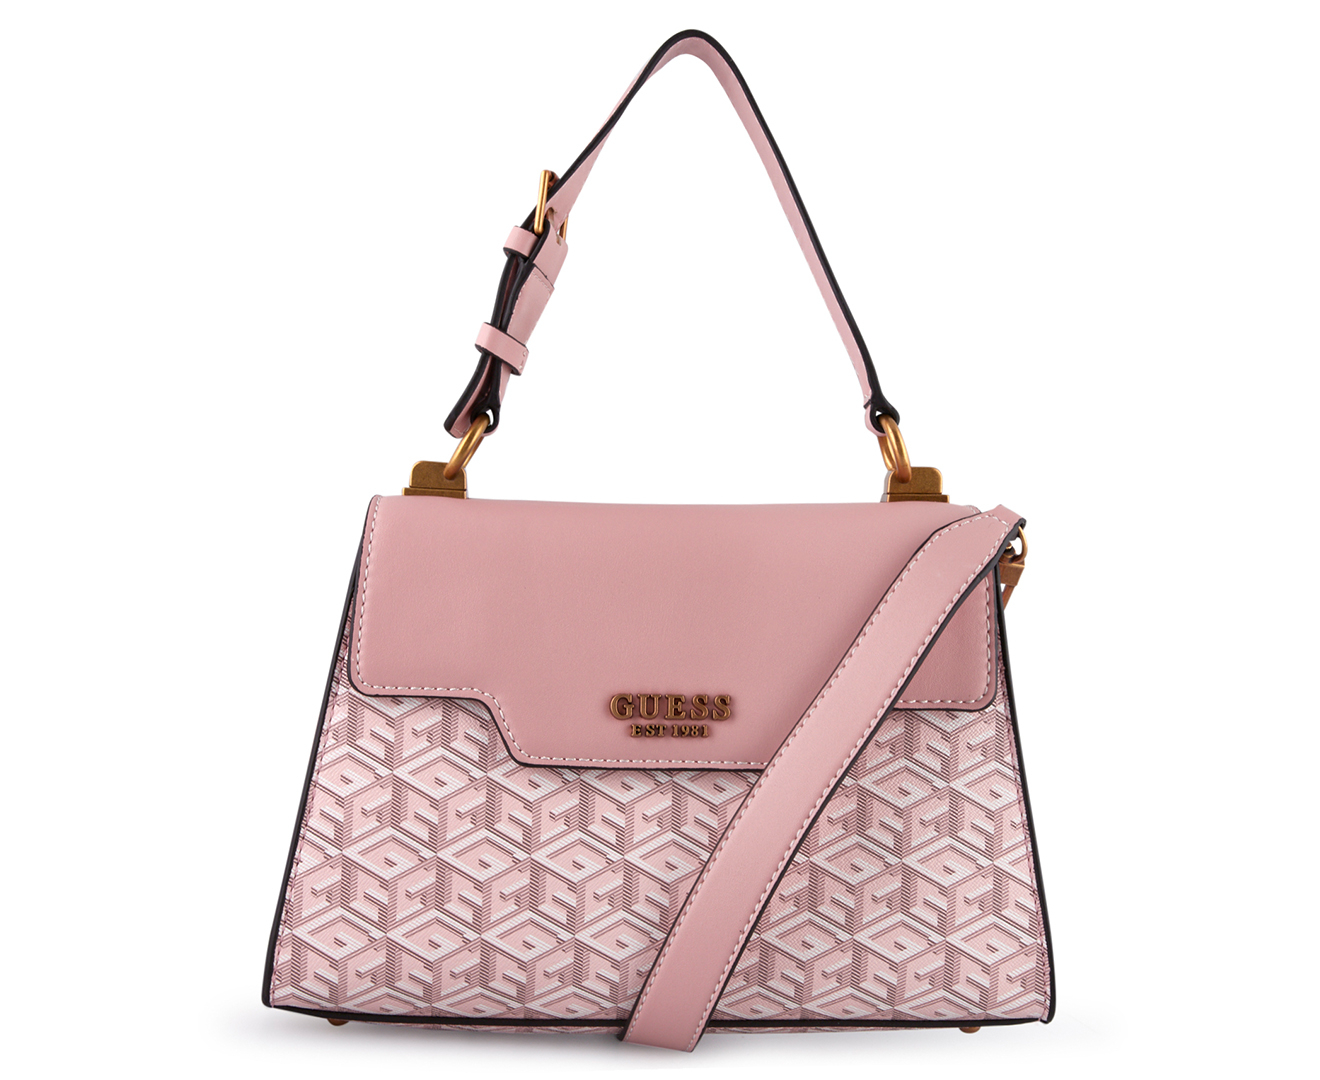 GUESS Hallie Top Handle Flap Crossbody Bag - Pale Rose Logo | Catch.com.au